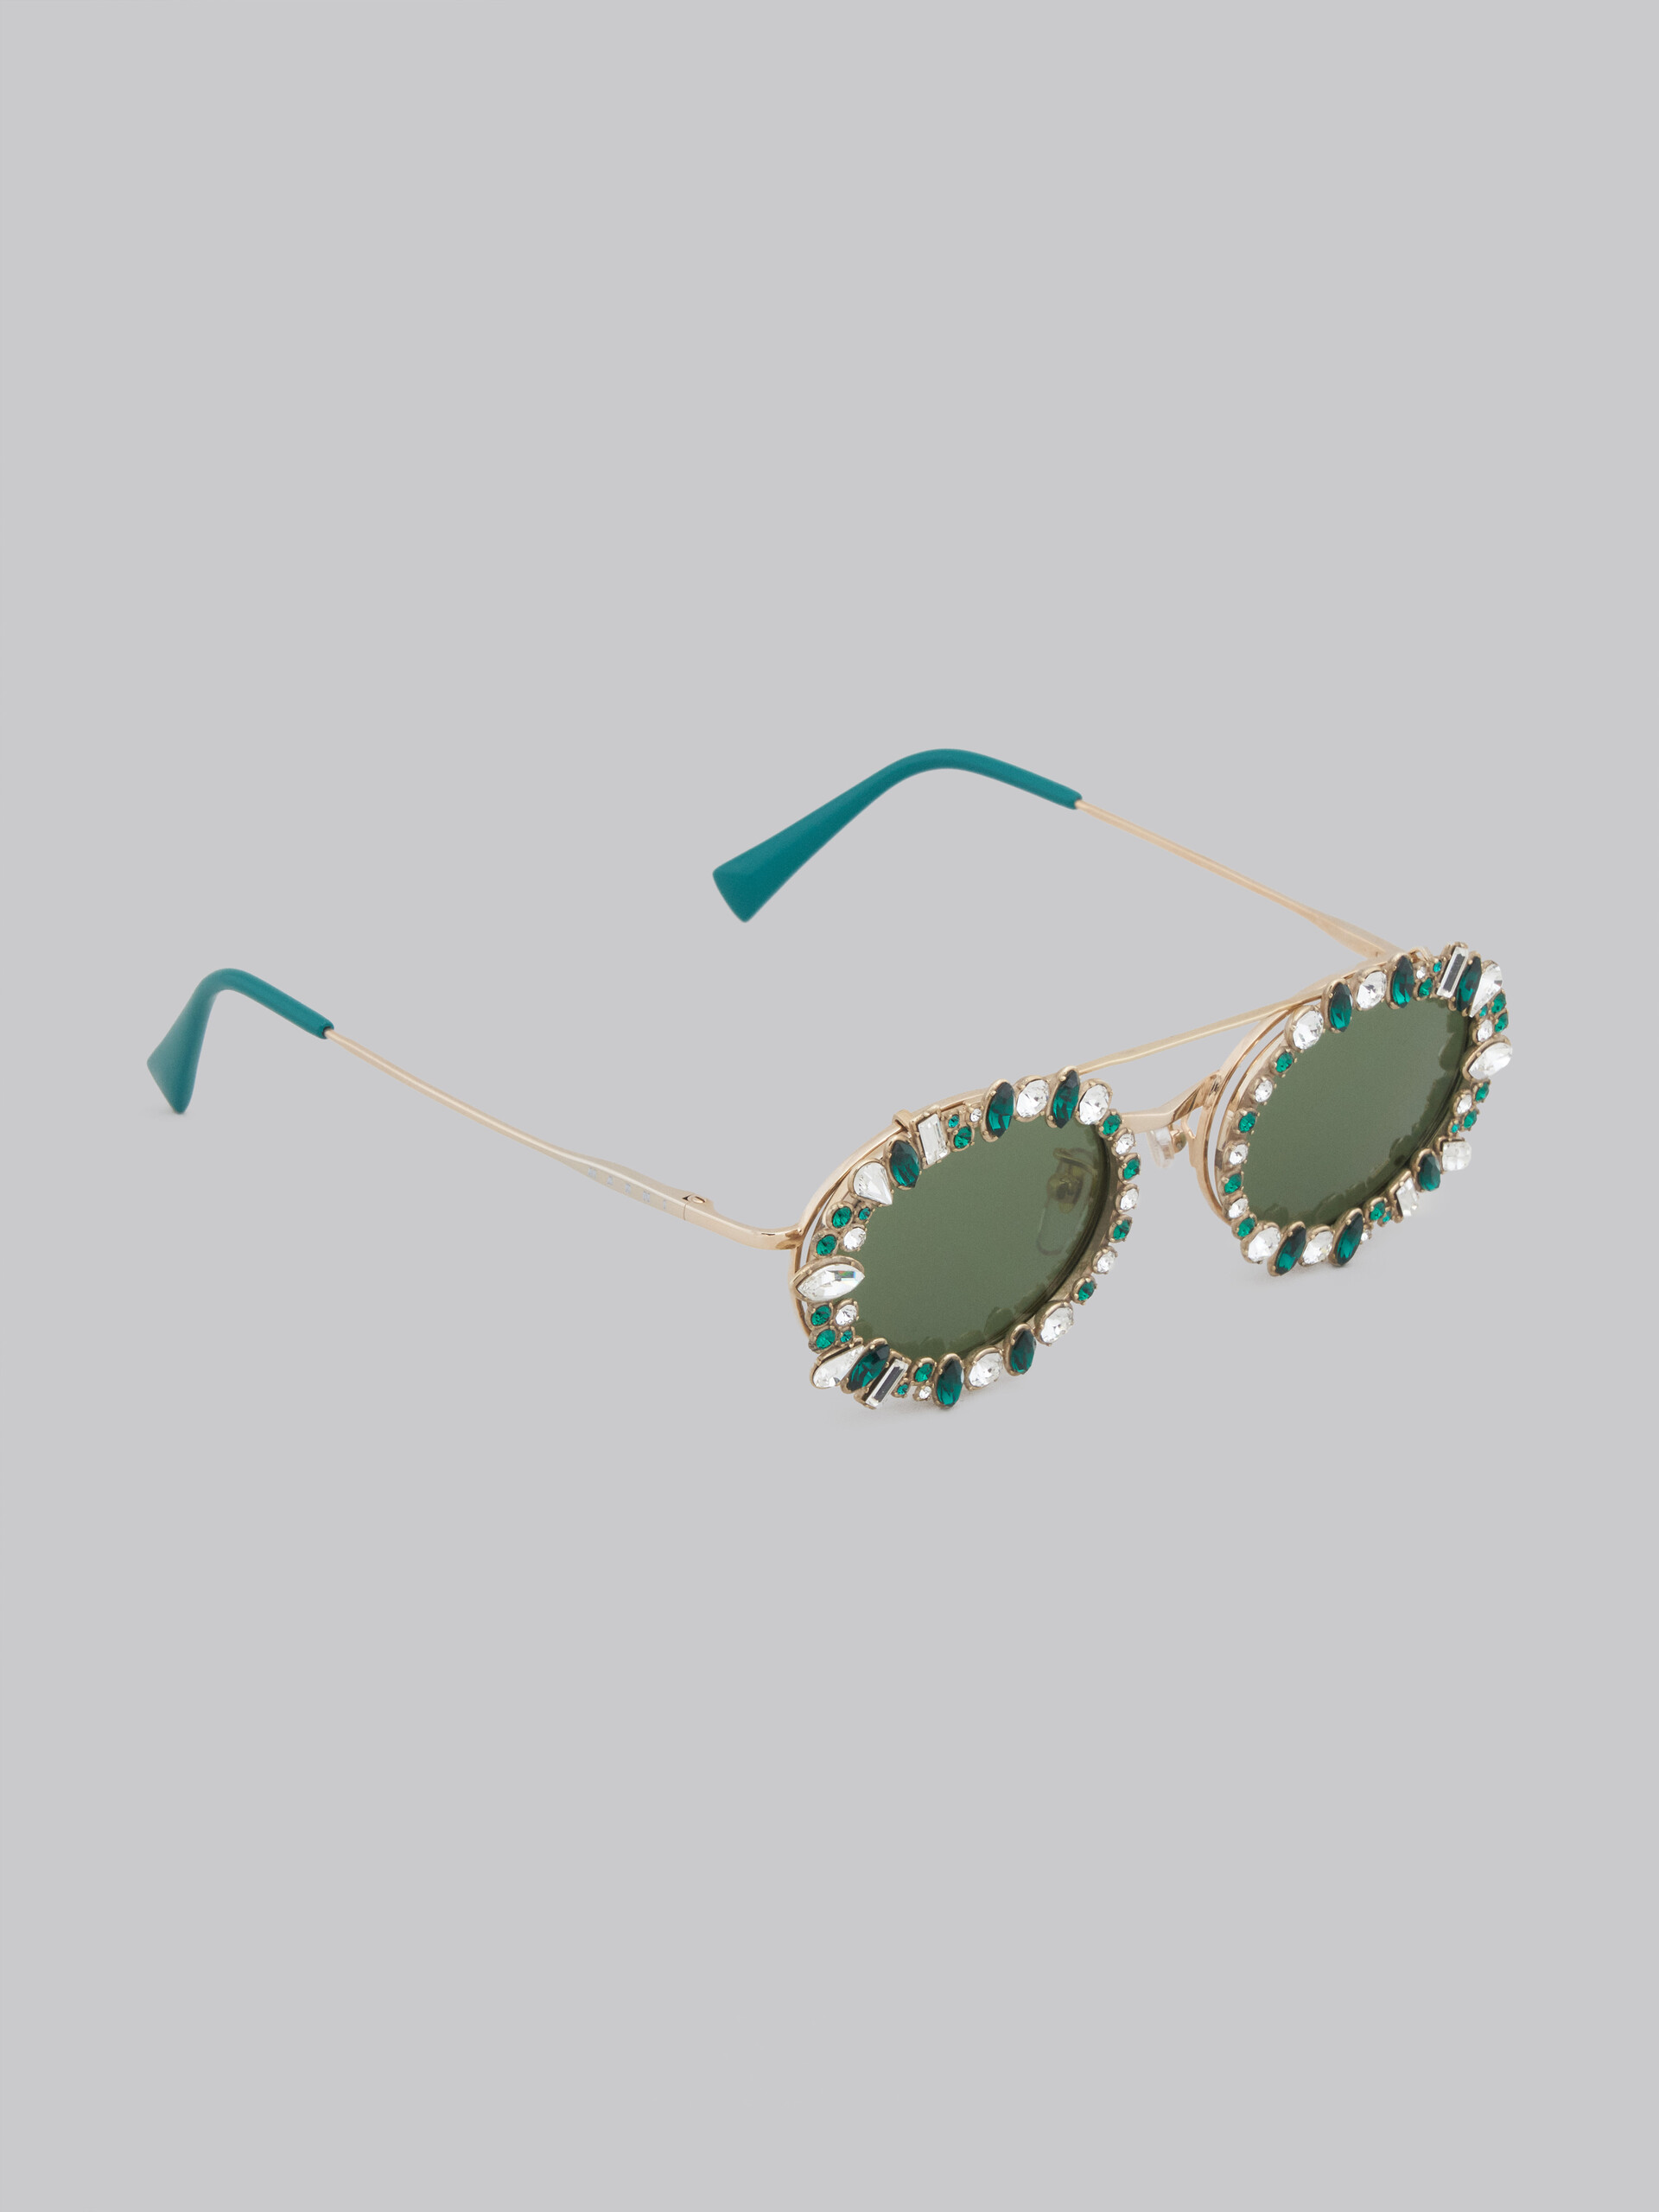 Gold WAITOMO CAVES glasses - Optical - Image 2